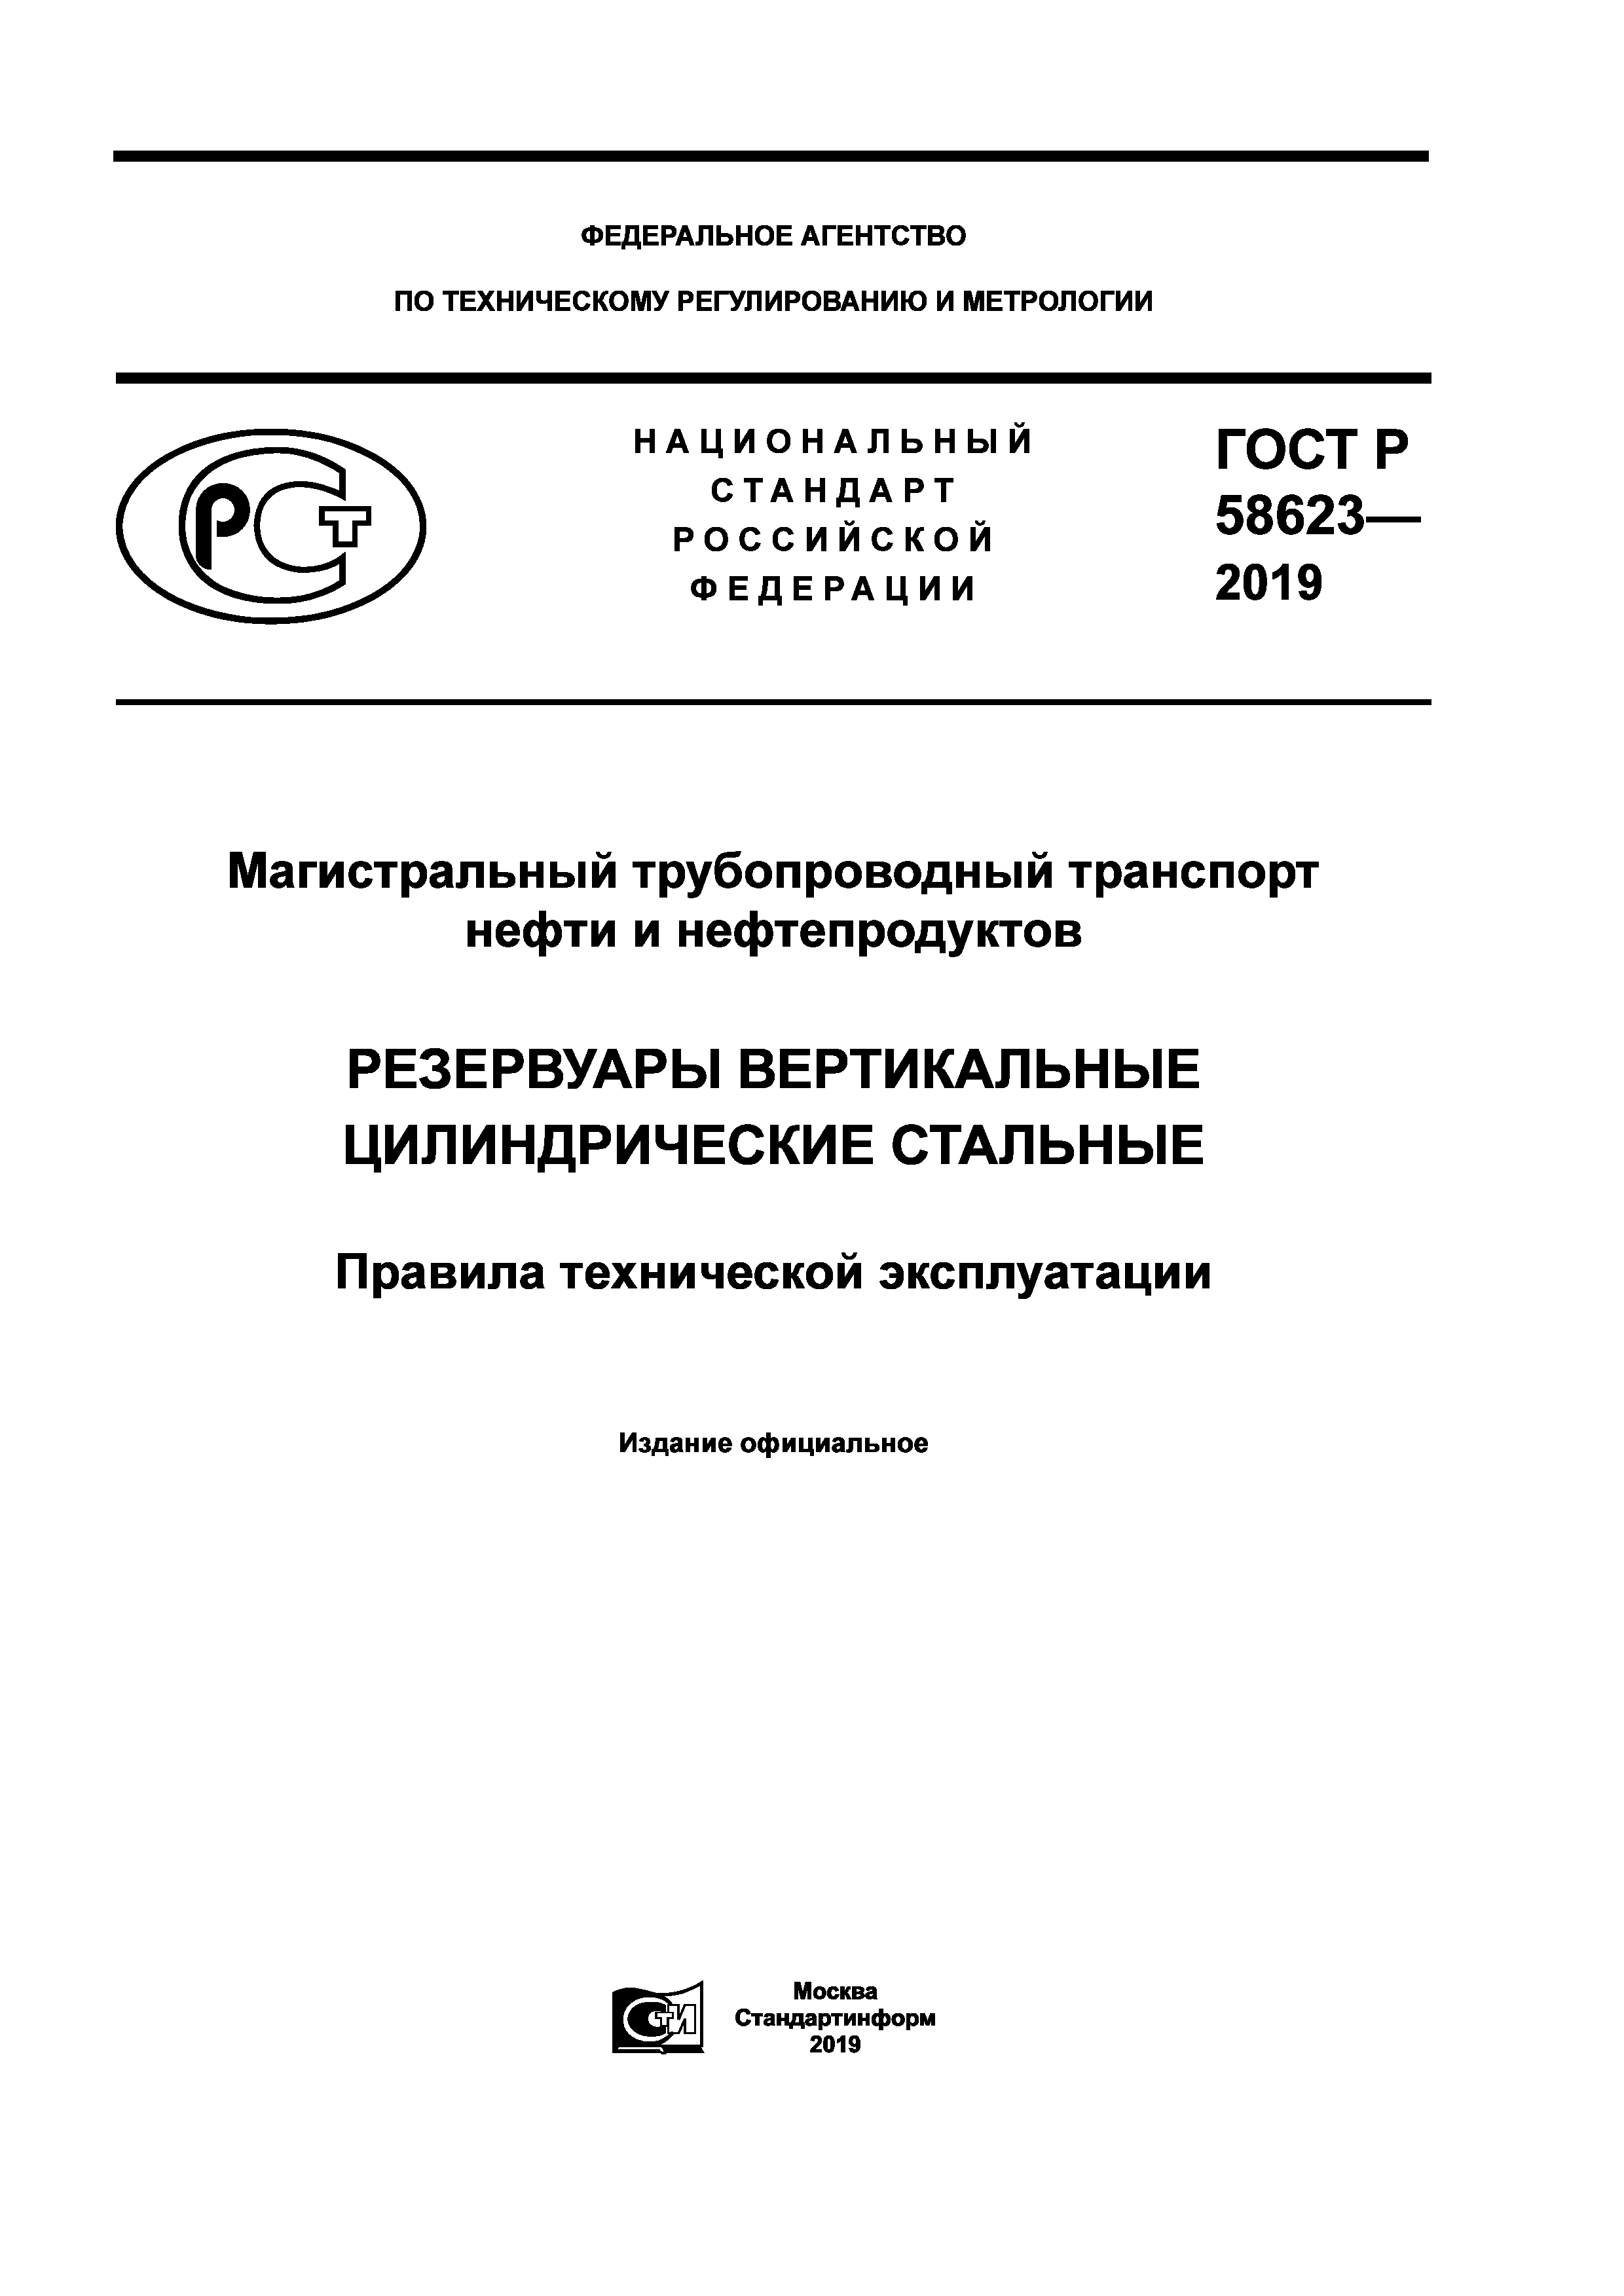 ГОСТ Р 58623-2019